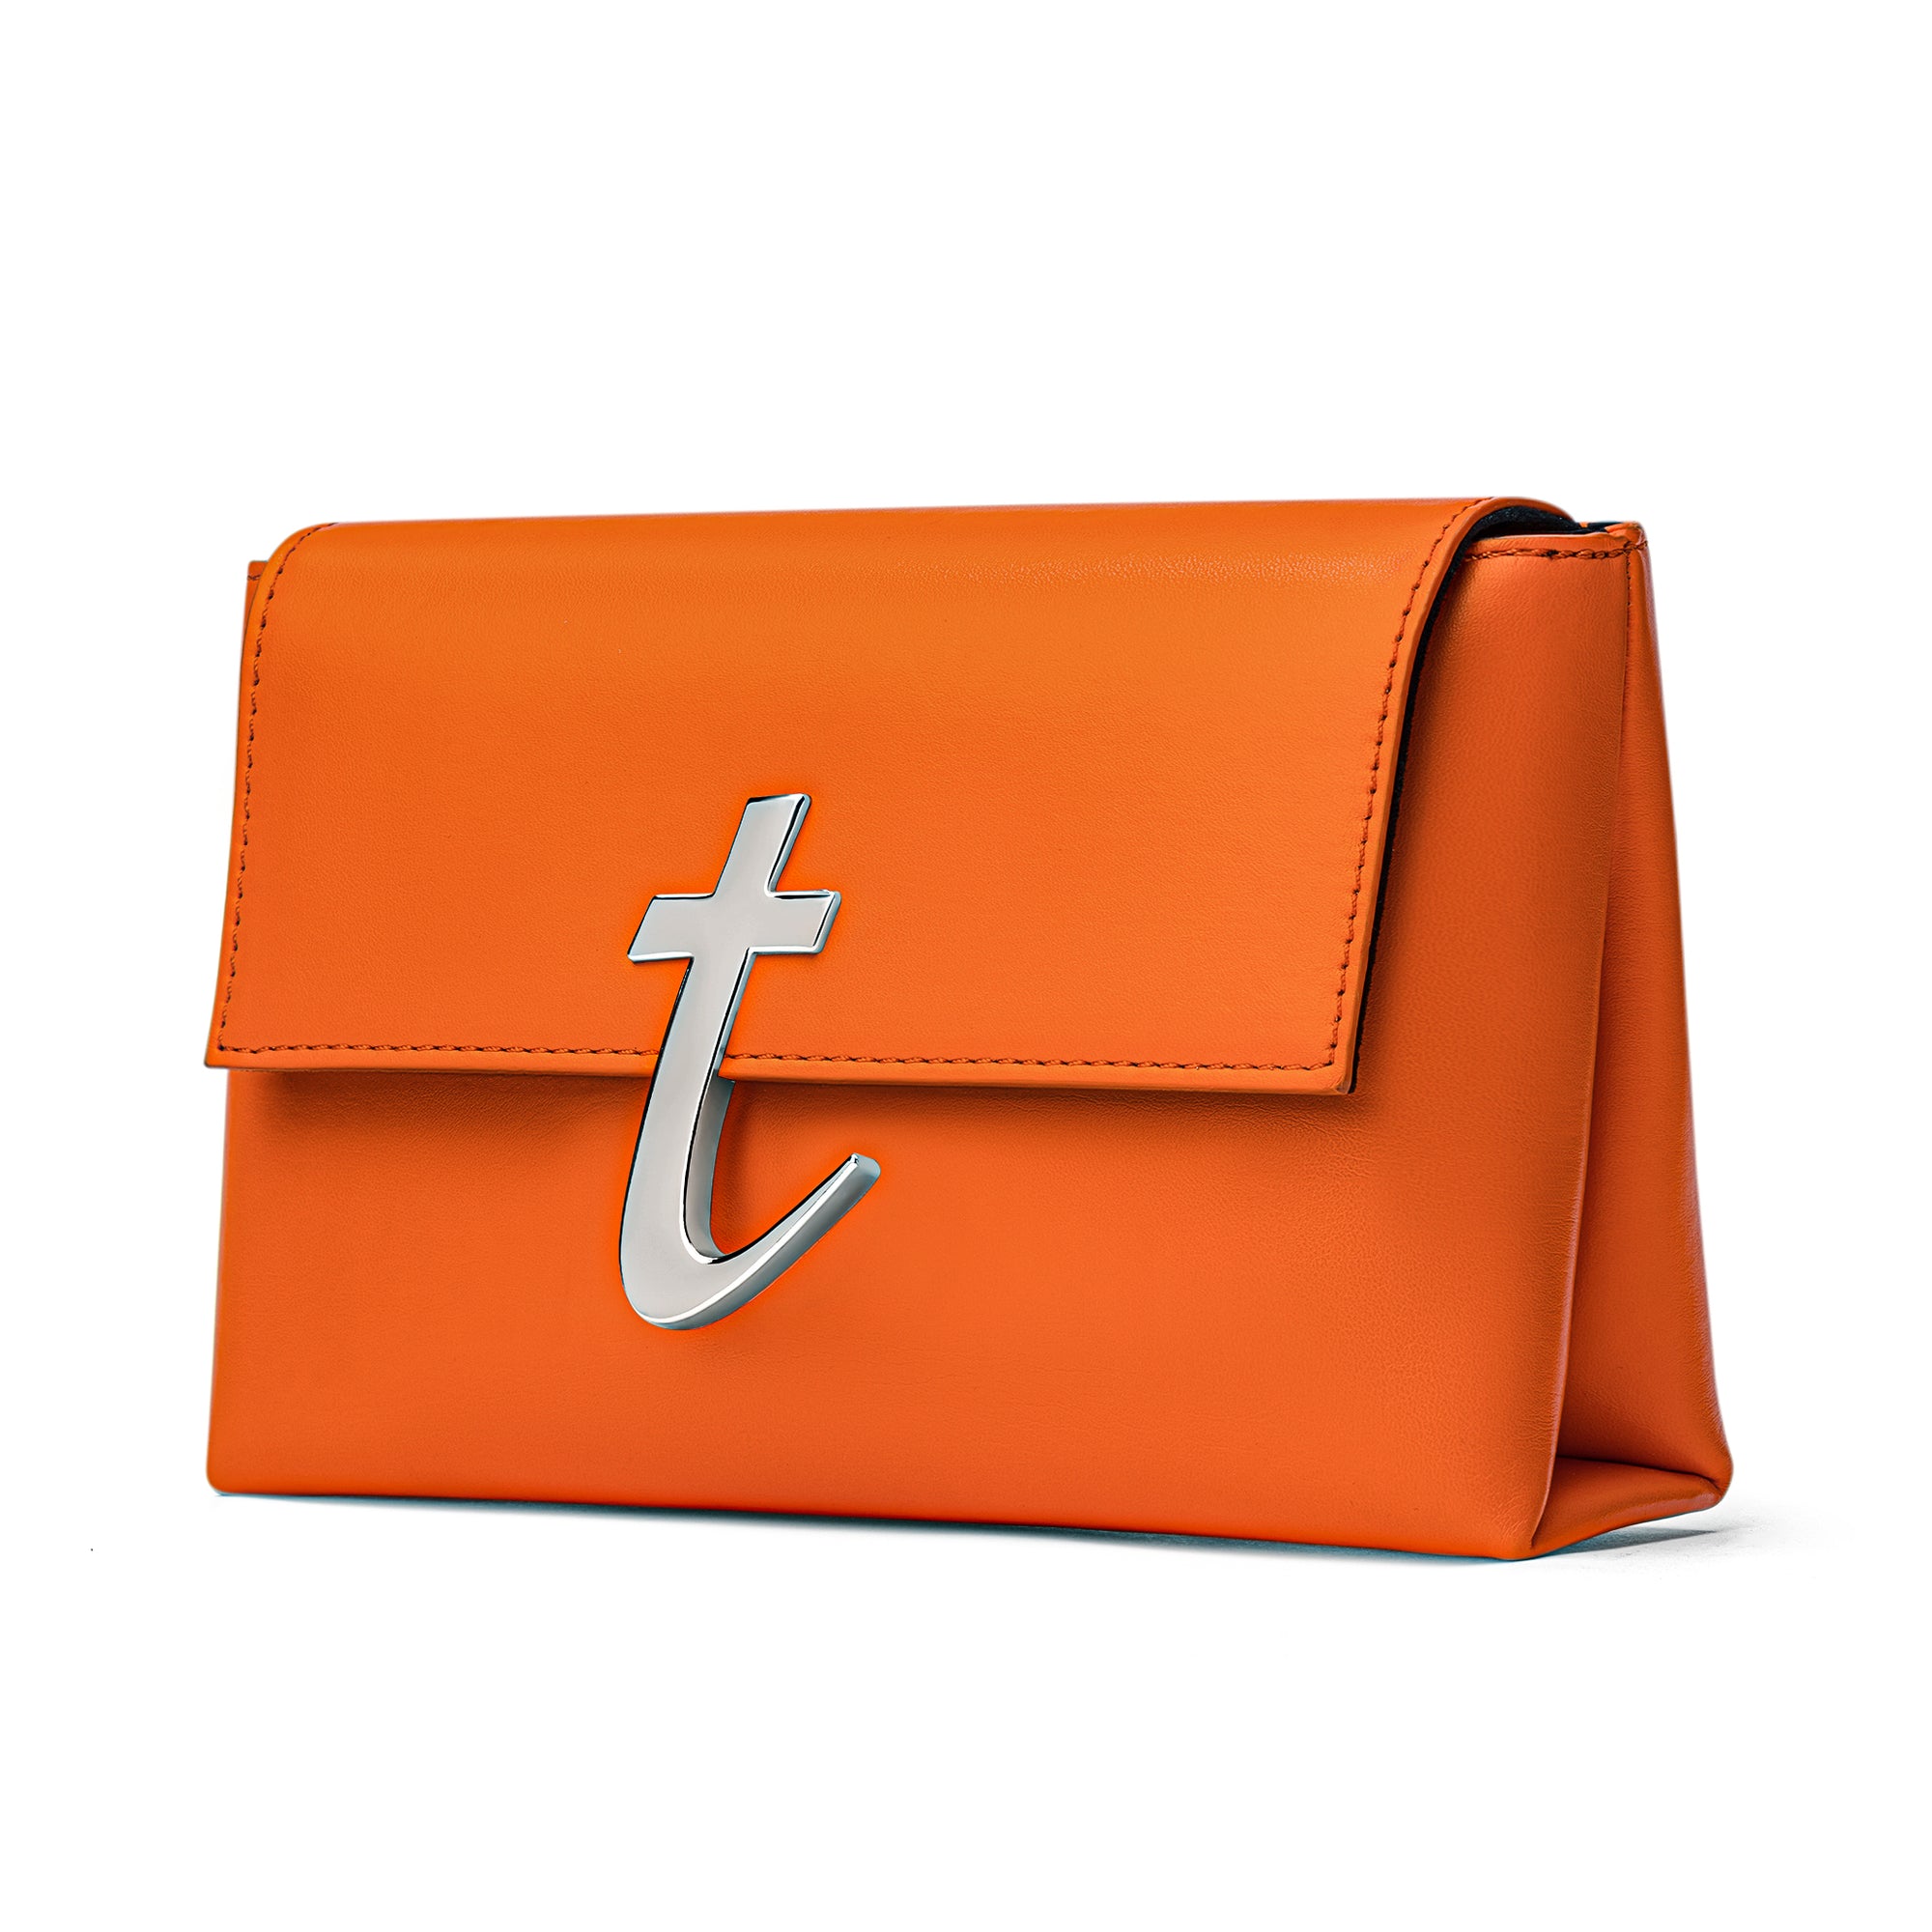 Belt Bag in Bright Orange